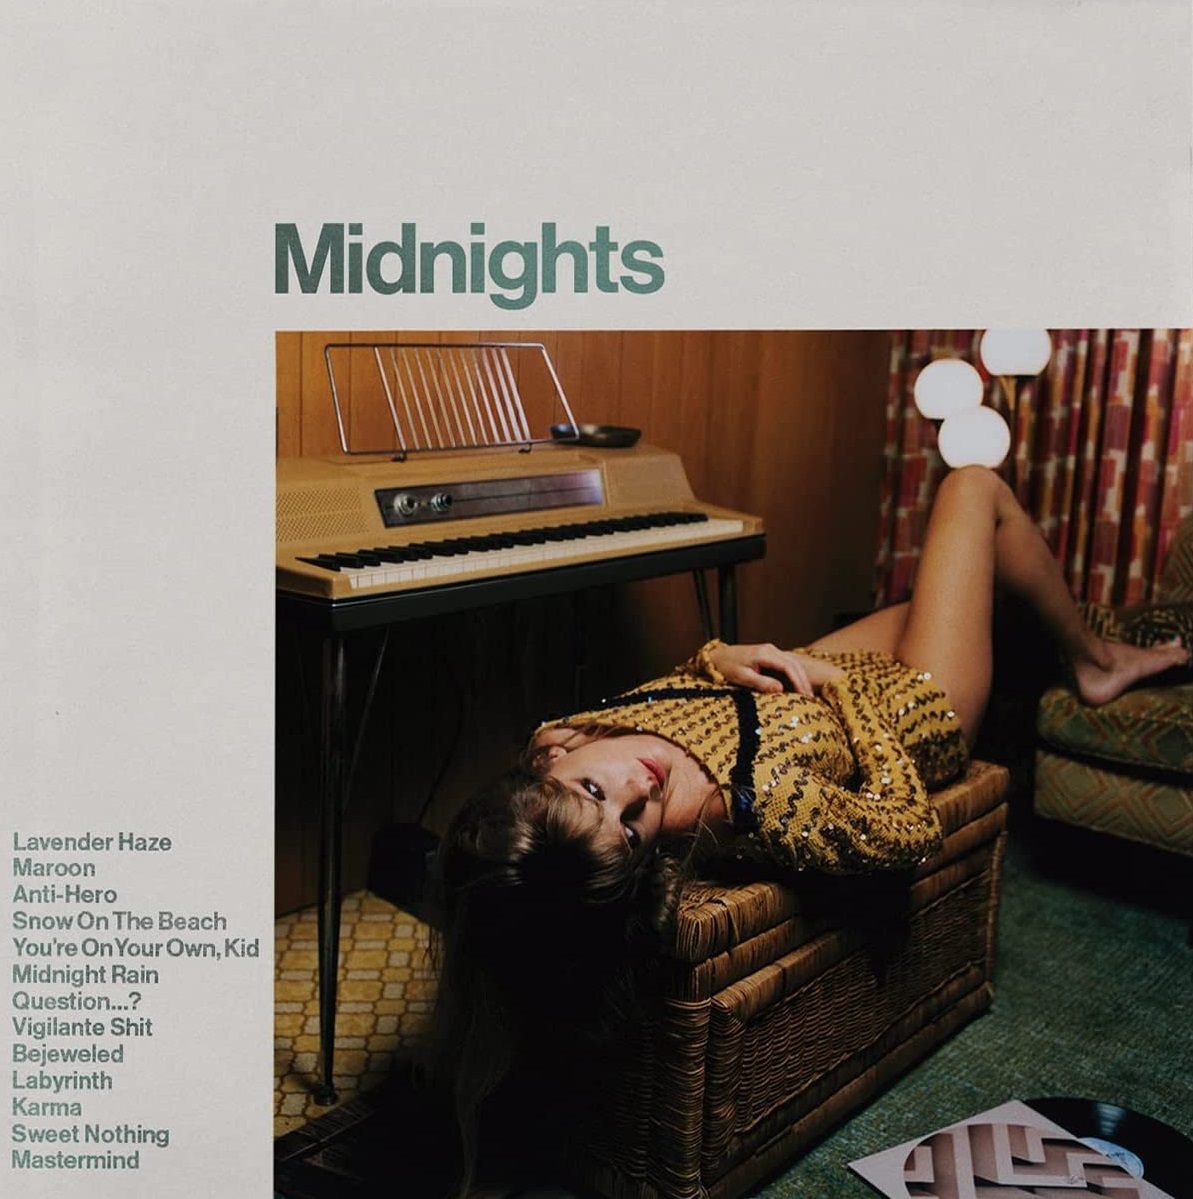 Swift Taylor - Midnights